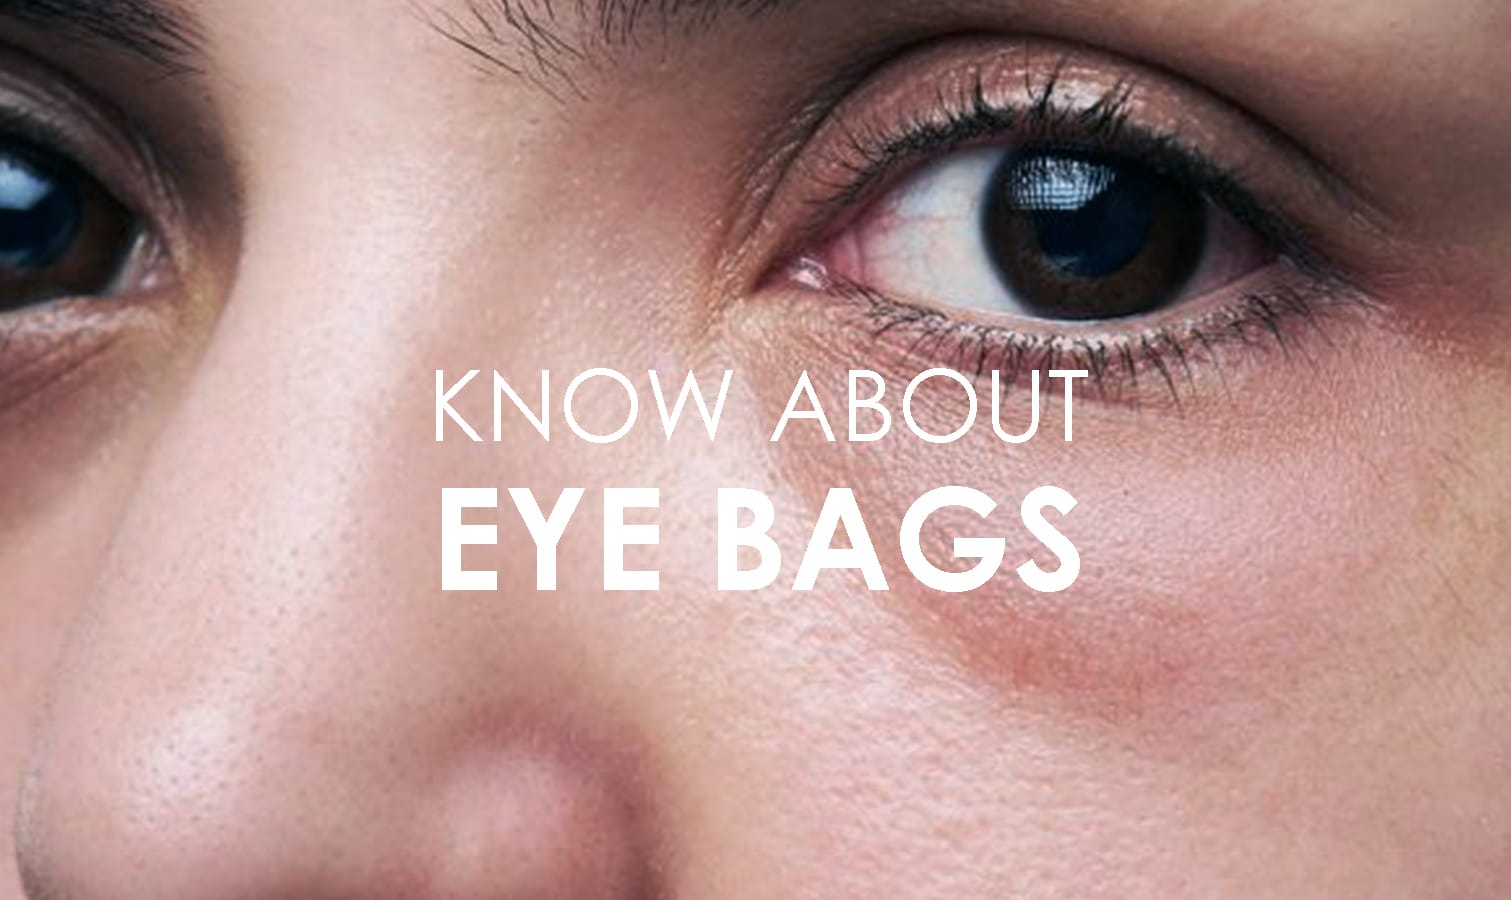 Types of Eye bags